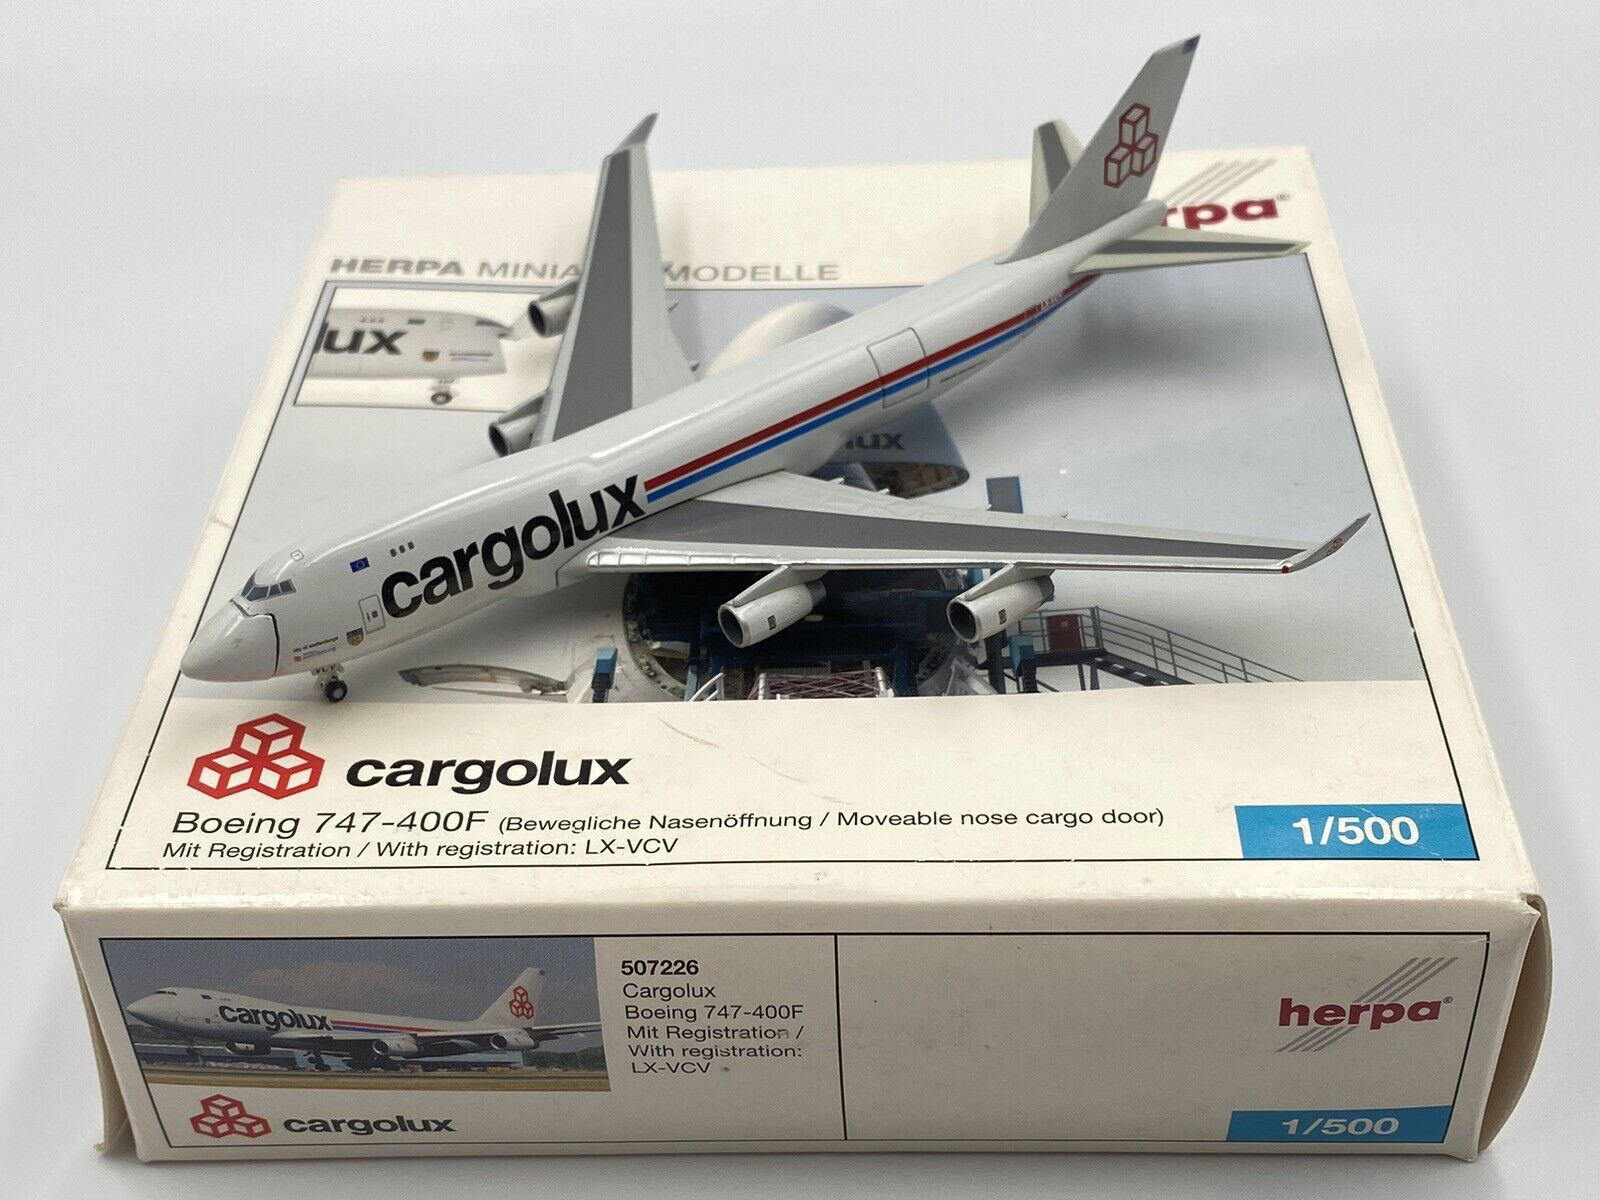 HERPA WINGS (507226) 1:500 CARGOLUX BOEING 747-400F BOXED 